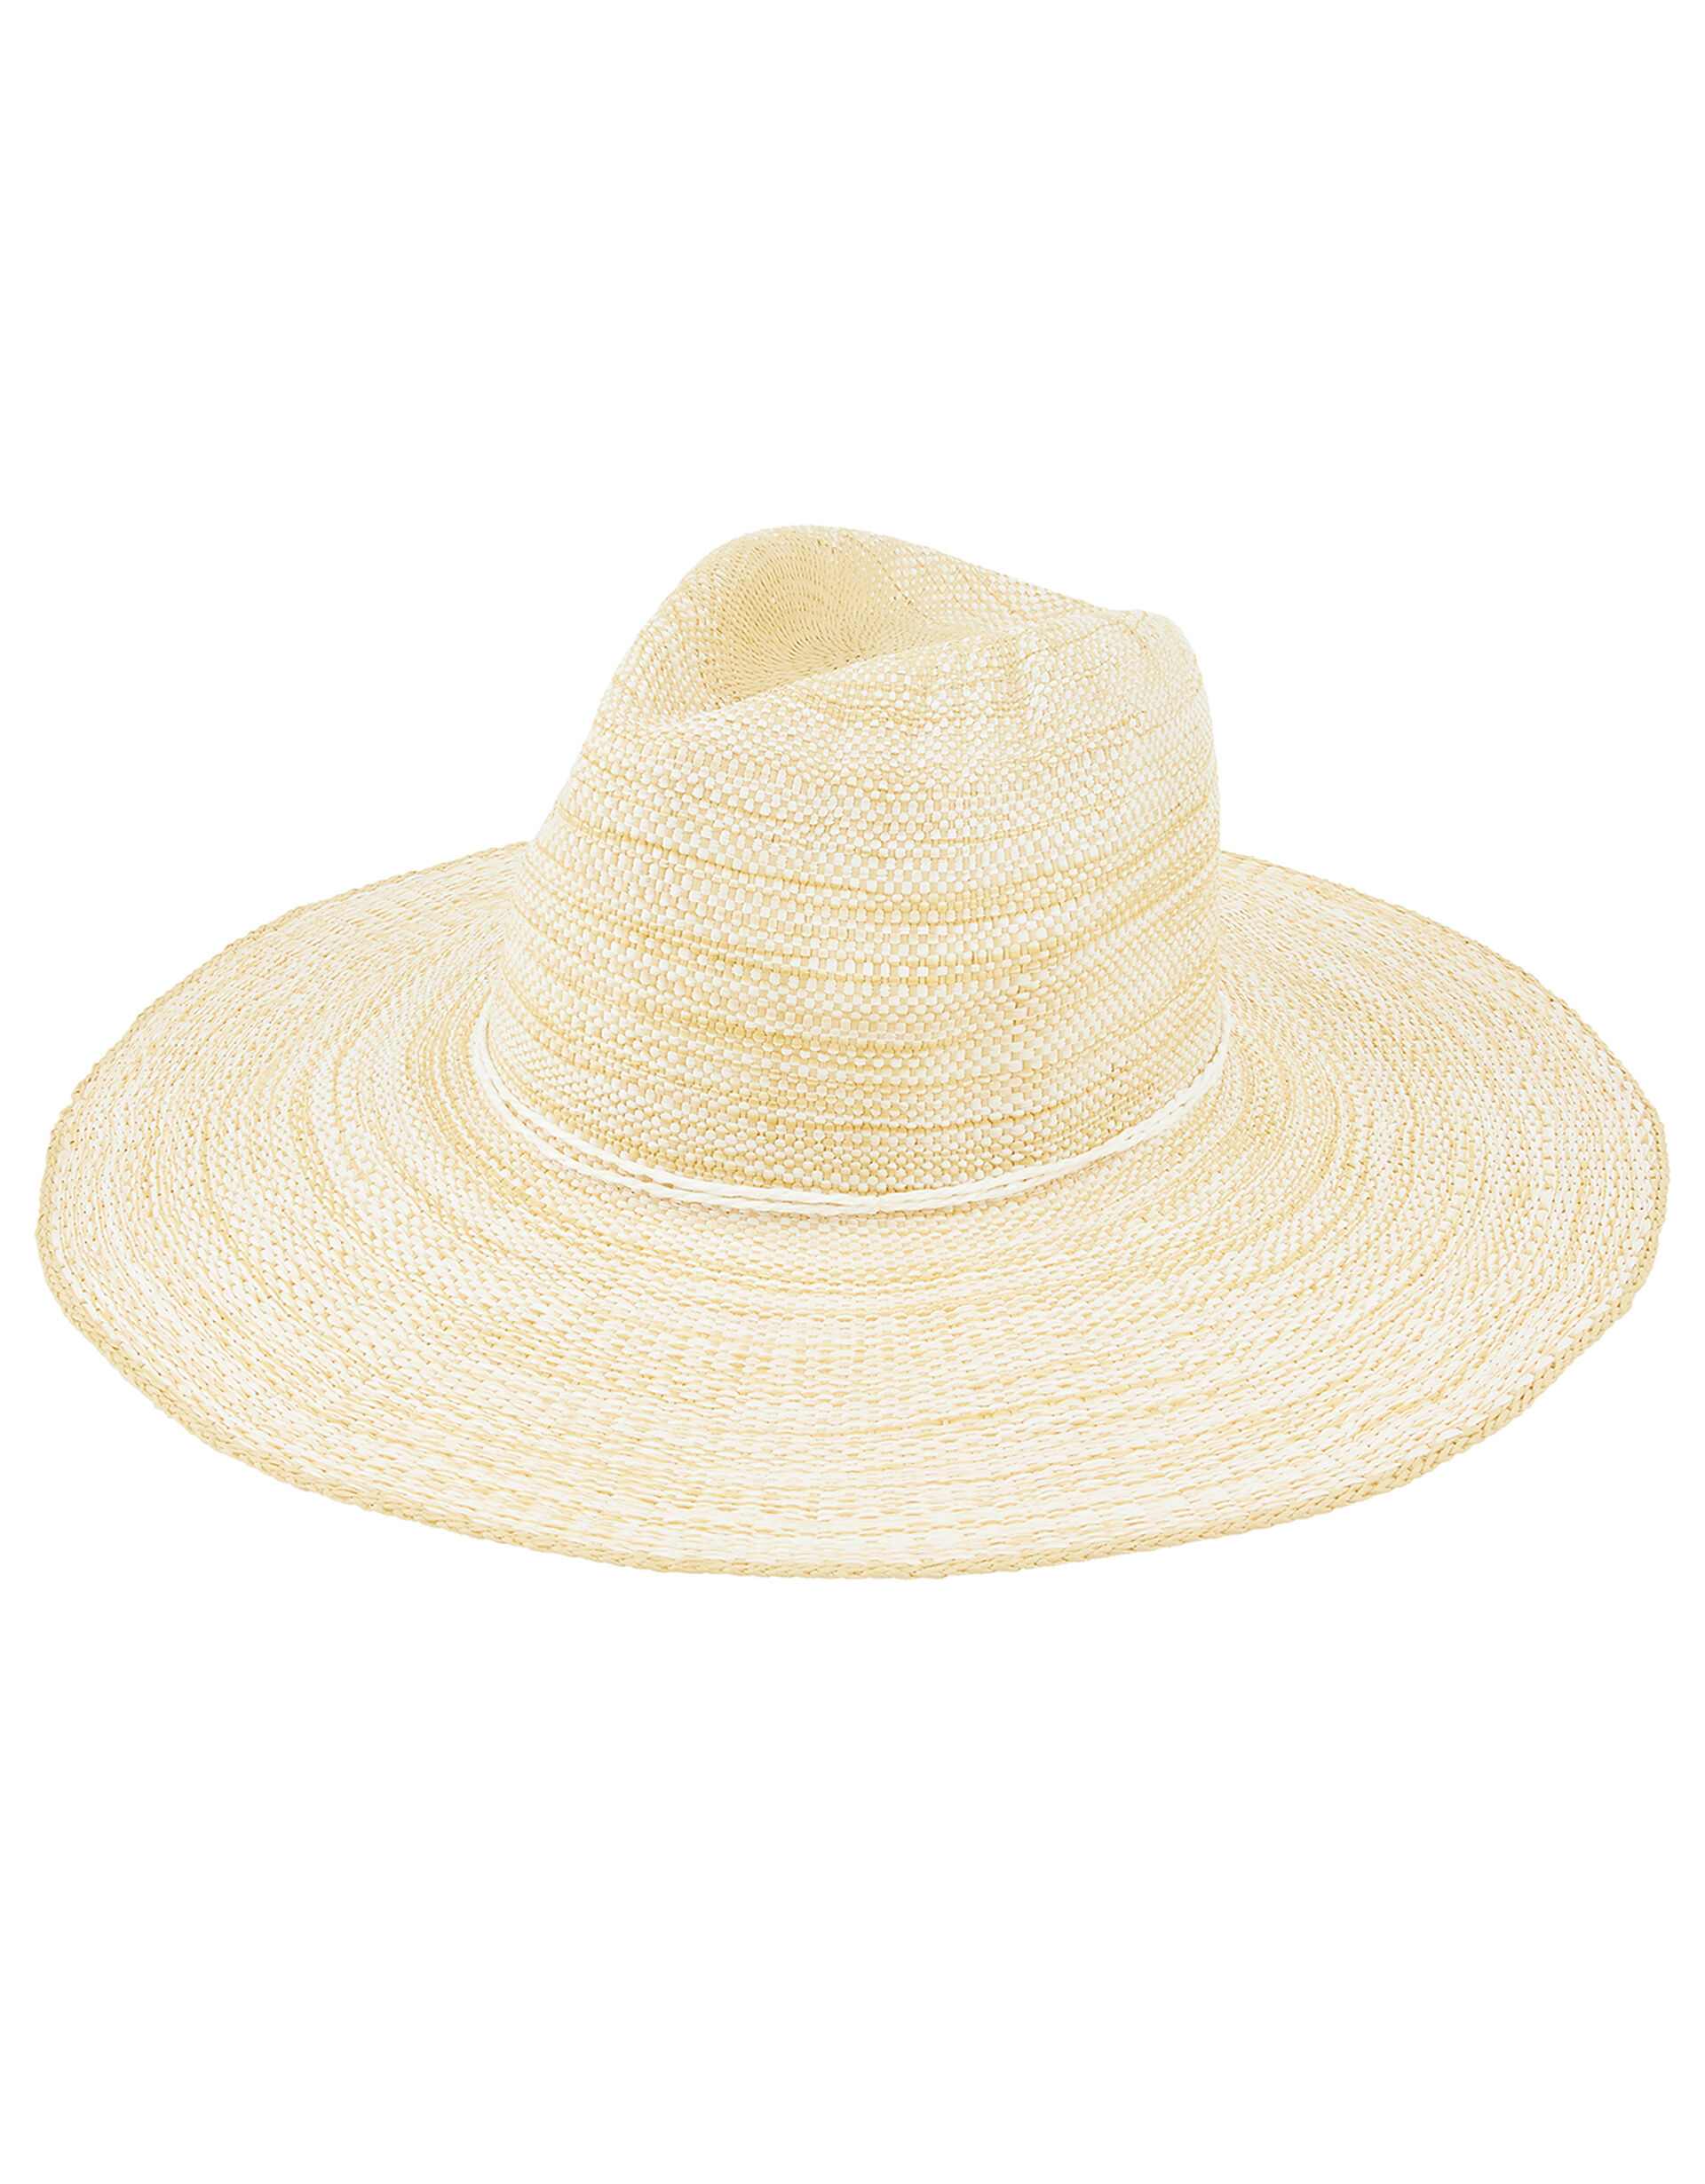 Simple Weave Wide Brim Fedora Hat, Natural (NATURAL), large